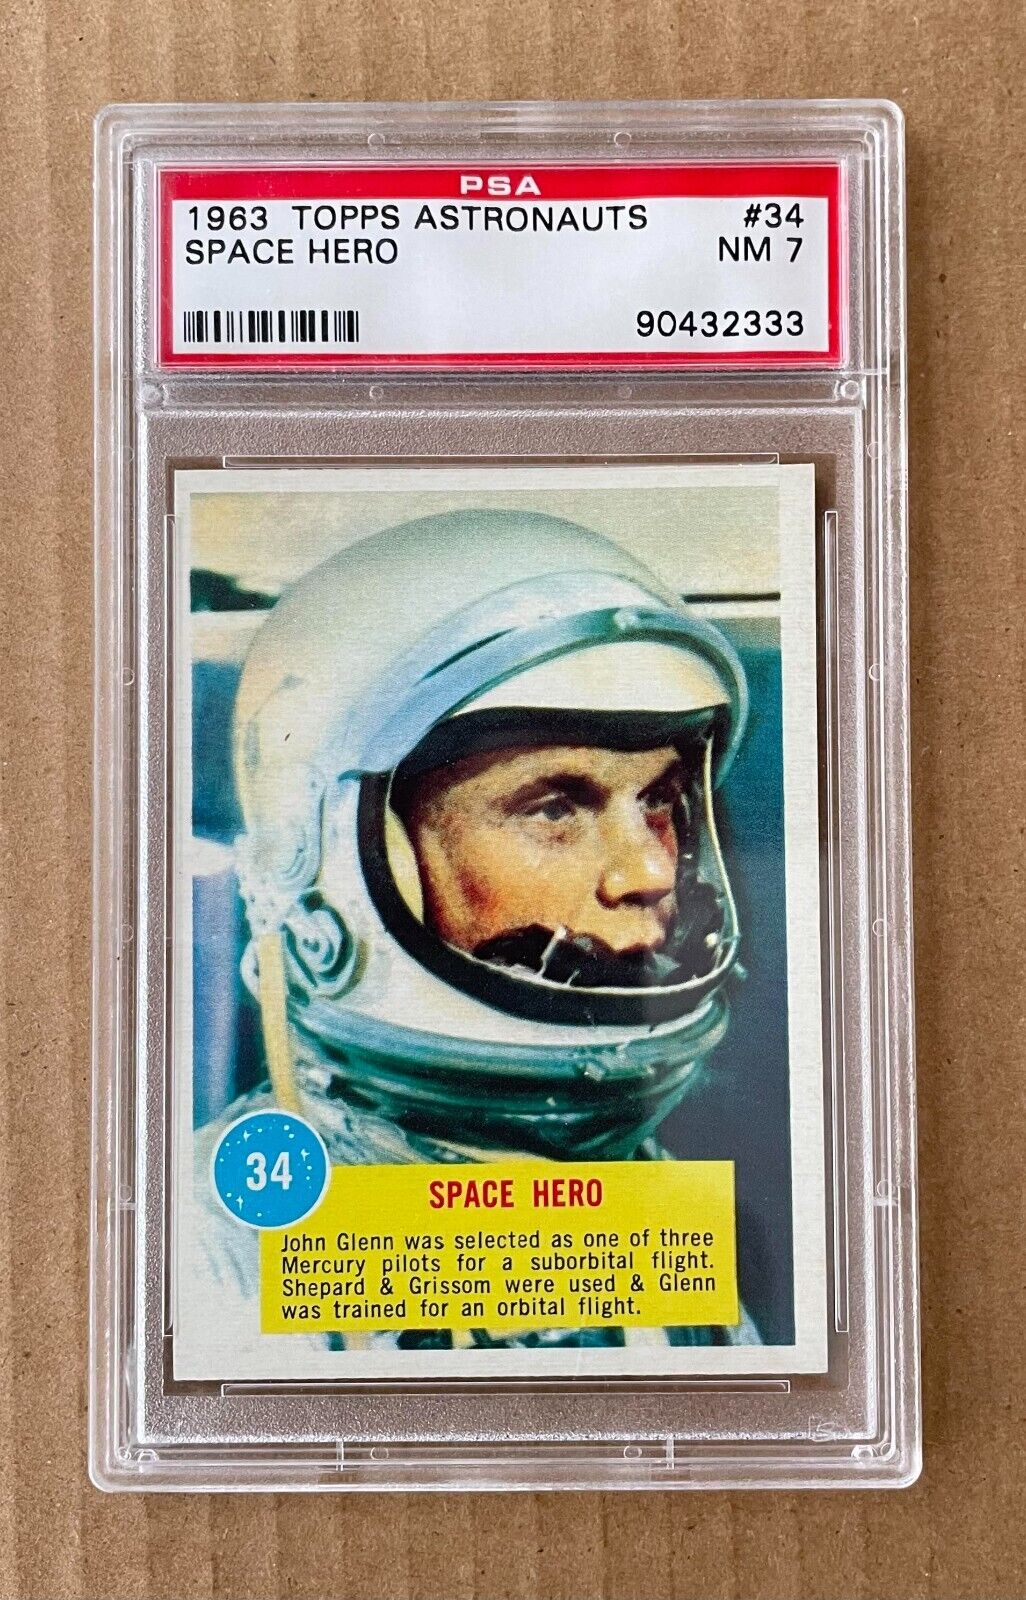 1963 Topps Astronauts #34 SPACE HERO PSA 7 NM John Glenn